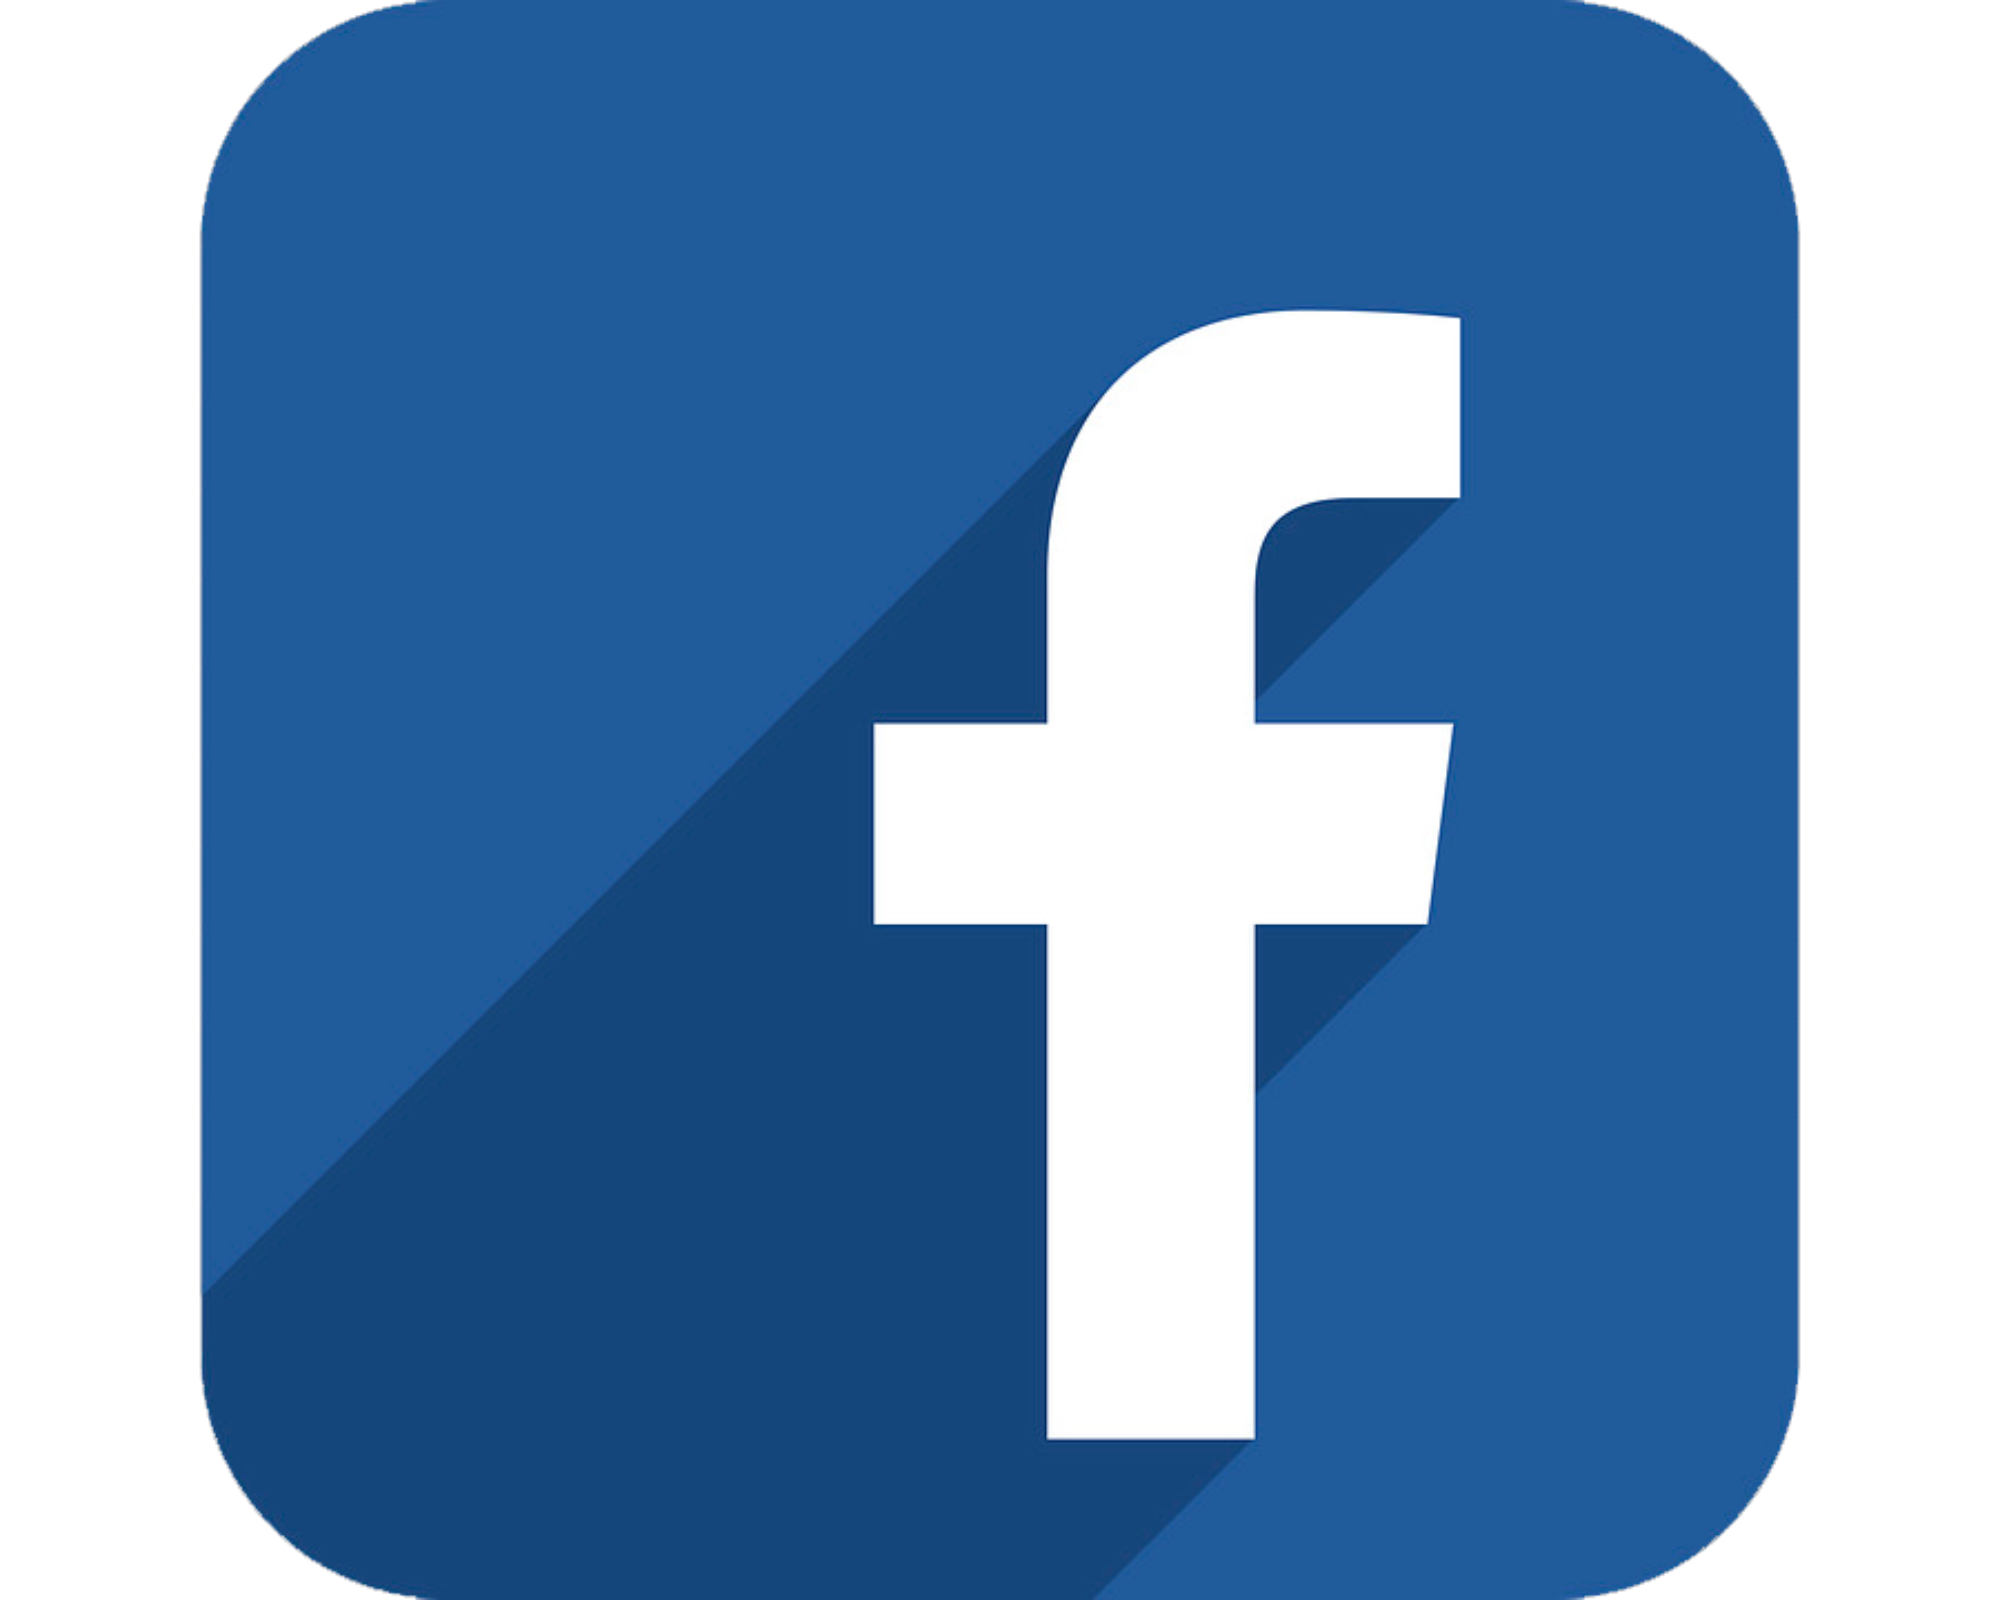 Https facebook com story php. Значок Фейсбук. Фейсбук без фона. Значок фейсбука на прозрачном фоне. Фейсбук логотип без фона.